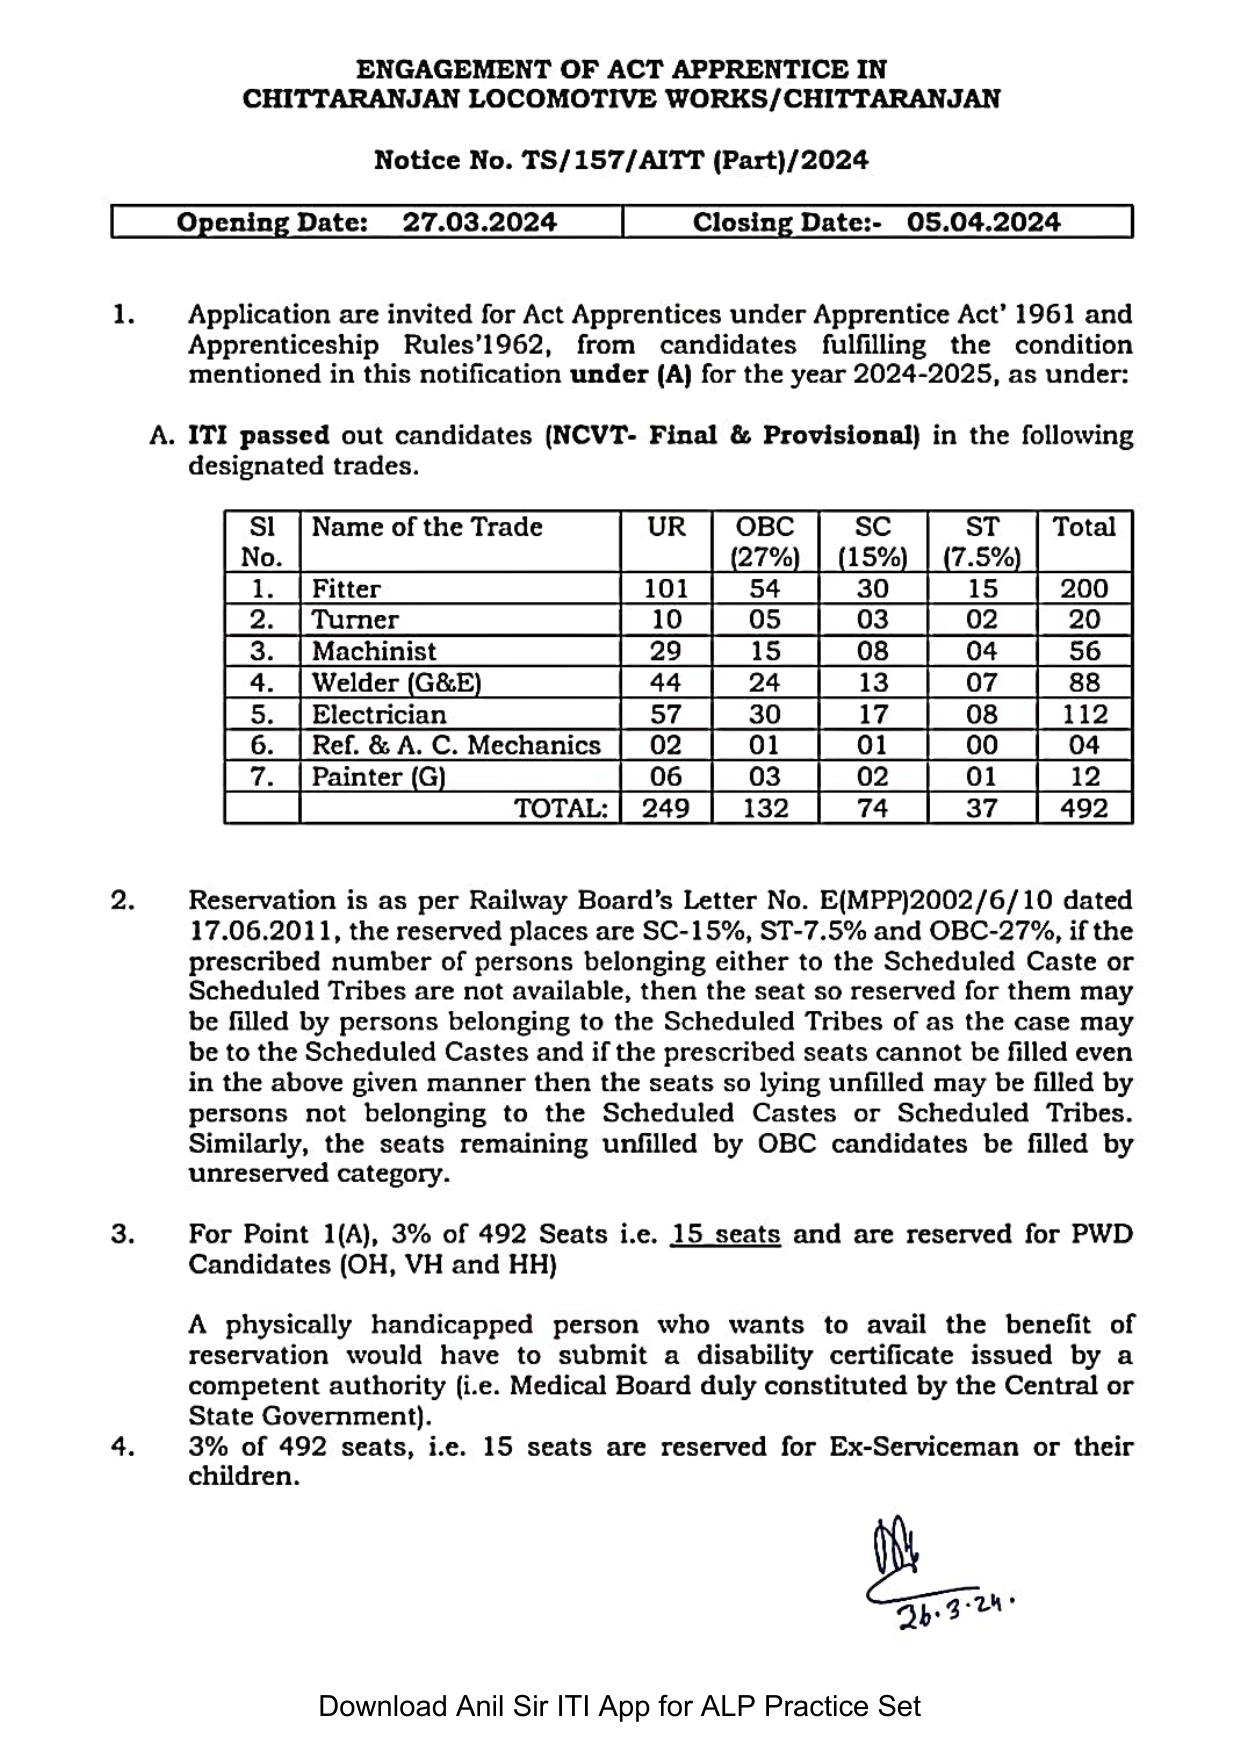 Chittaranjan Locomotive Works (CLW) Act Apprentice Recruitment 2024 - Page 1